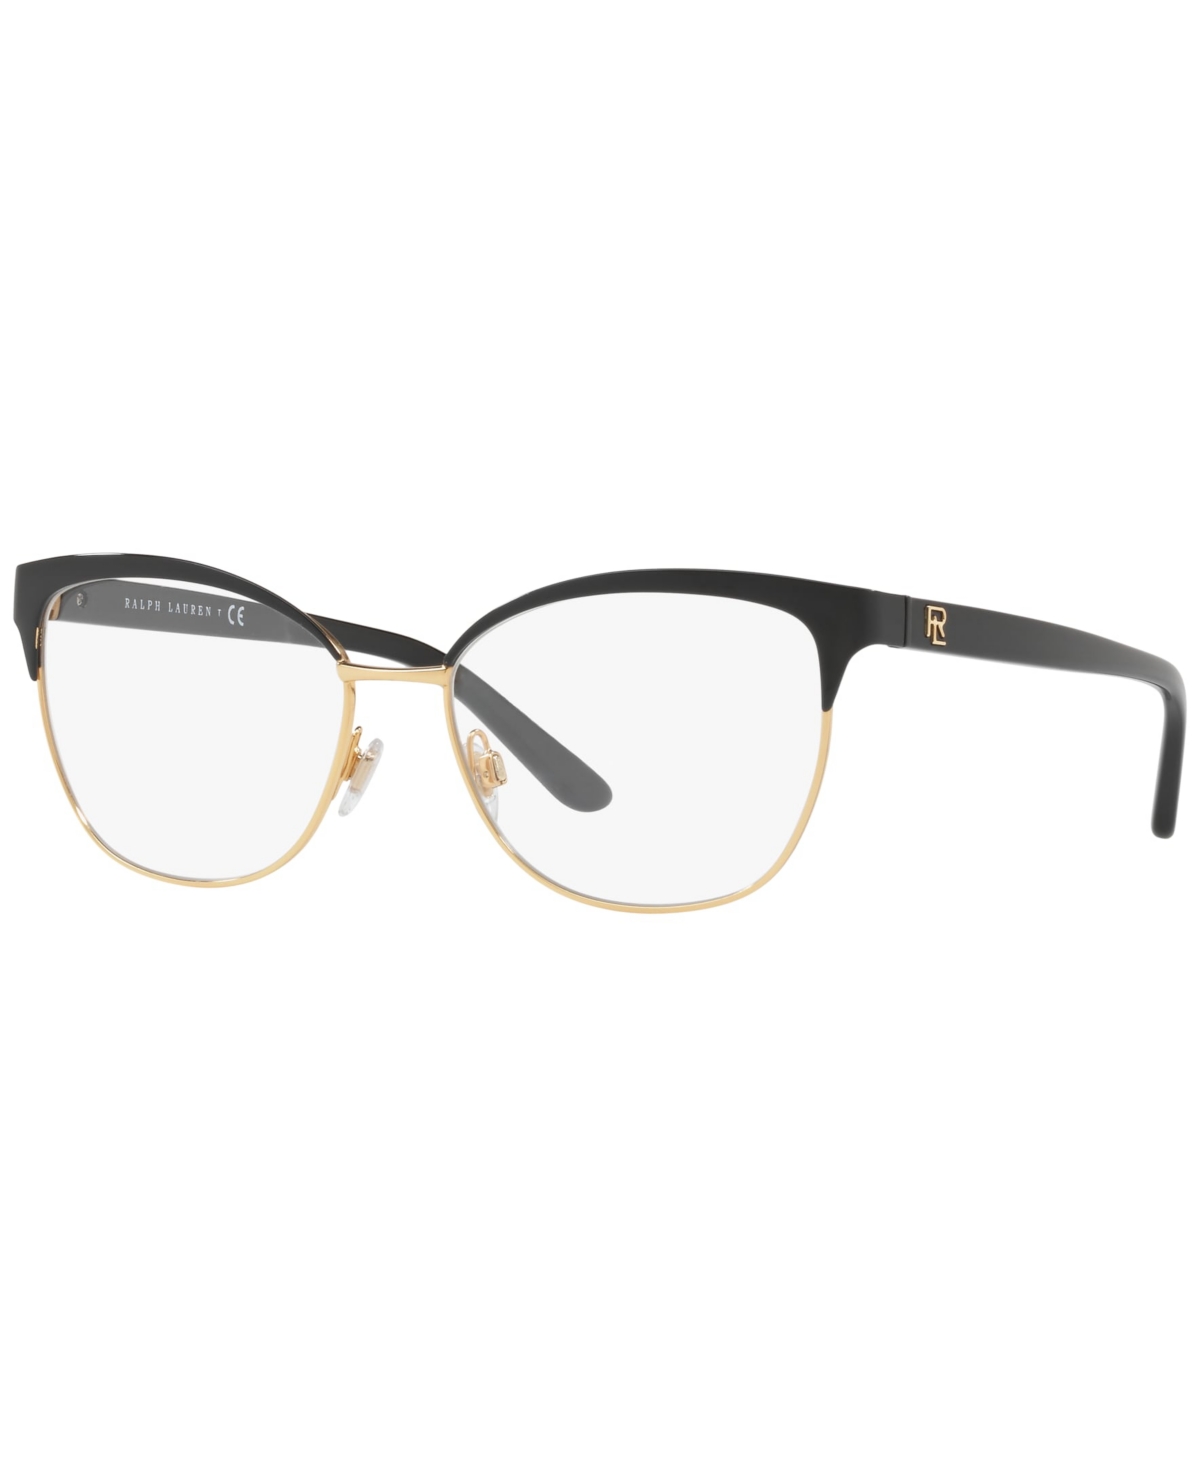 Women's Eyeglasses, RL5099 - Shiny Black On Gold